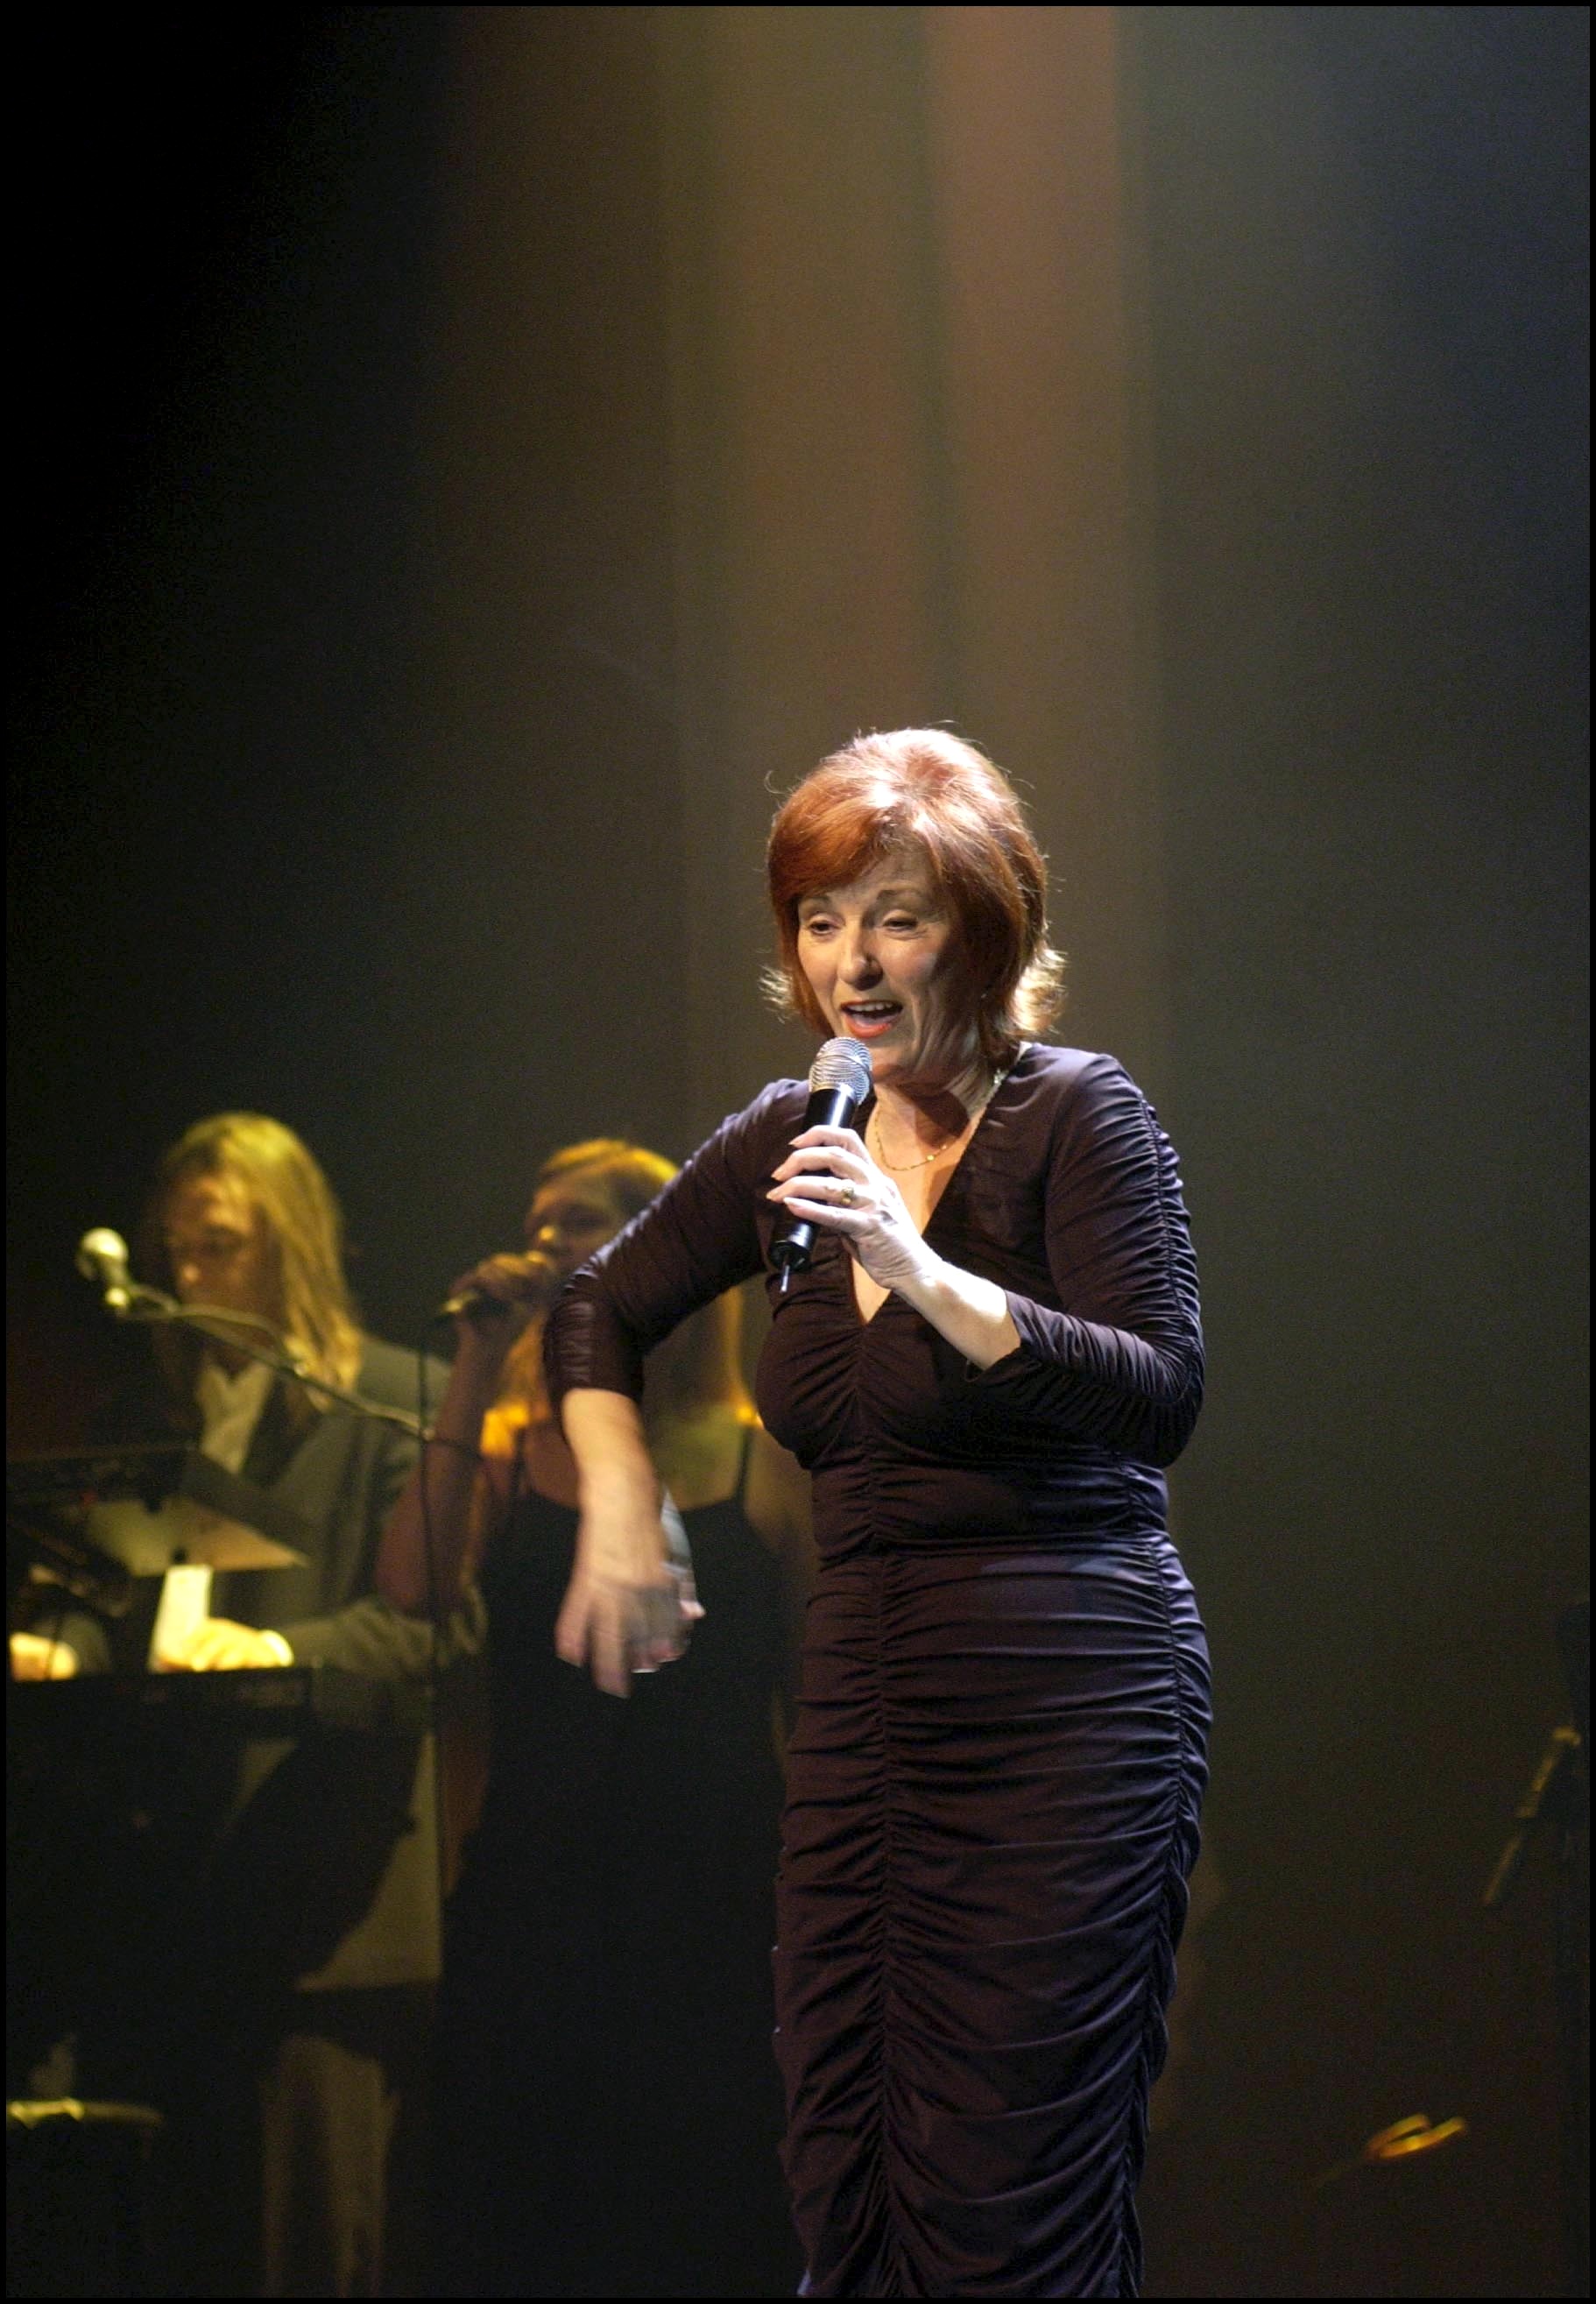 Claudette Dion in Montreal, Kanada am 11. Oktober 2002 | Quelle: Getty Images